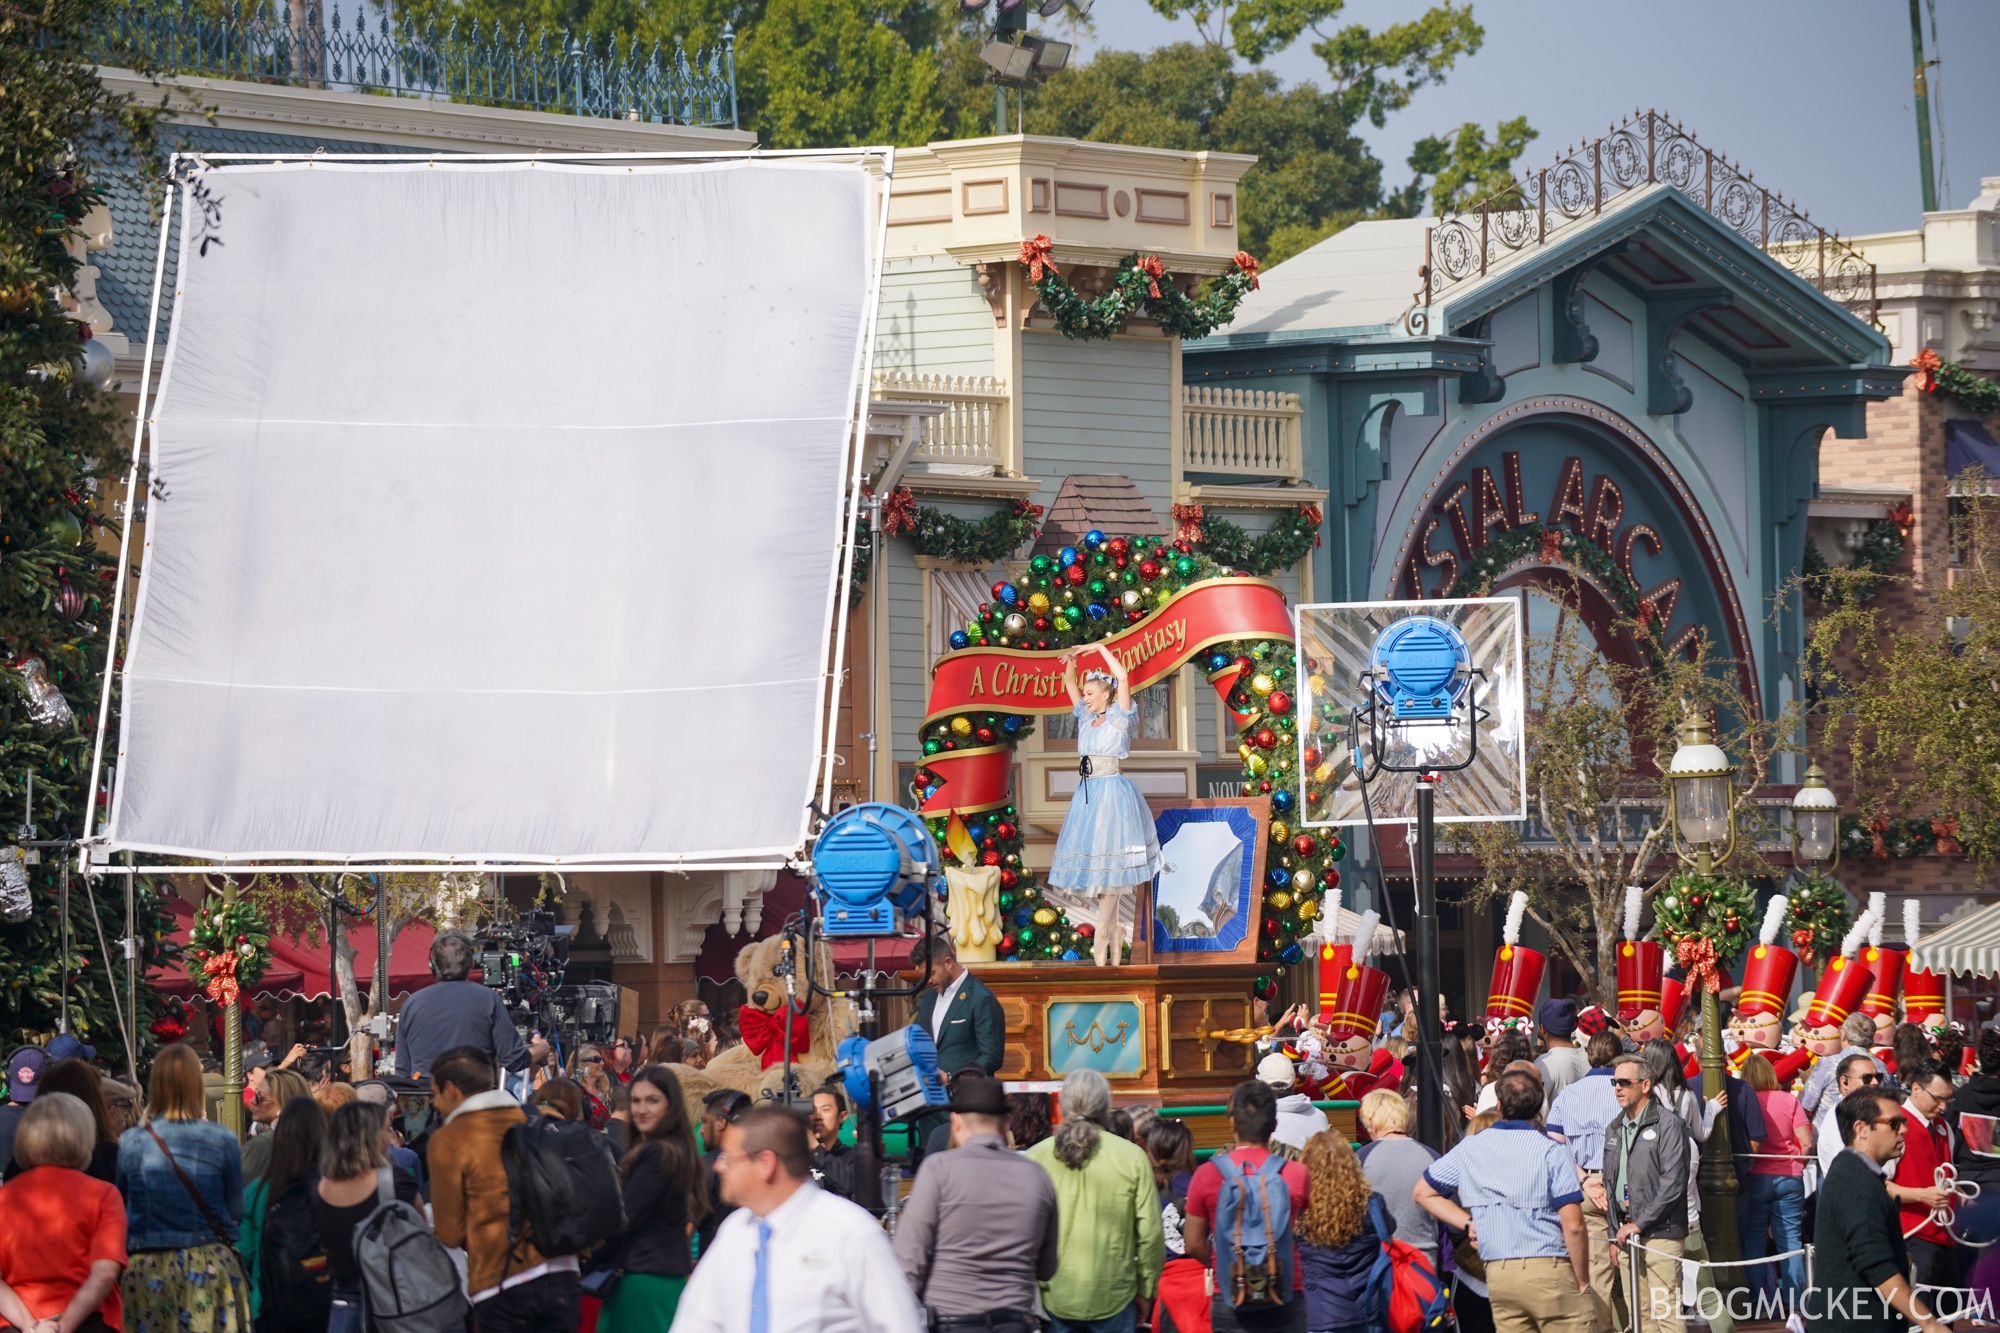 Disney Parks Holiday Special Parade Taping Underway at Disneyland